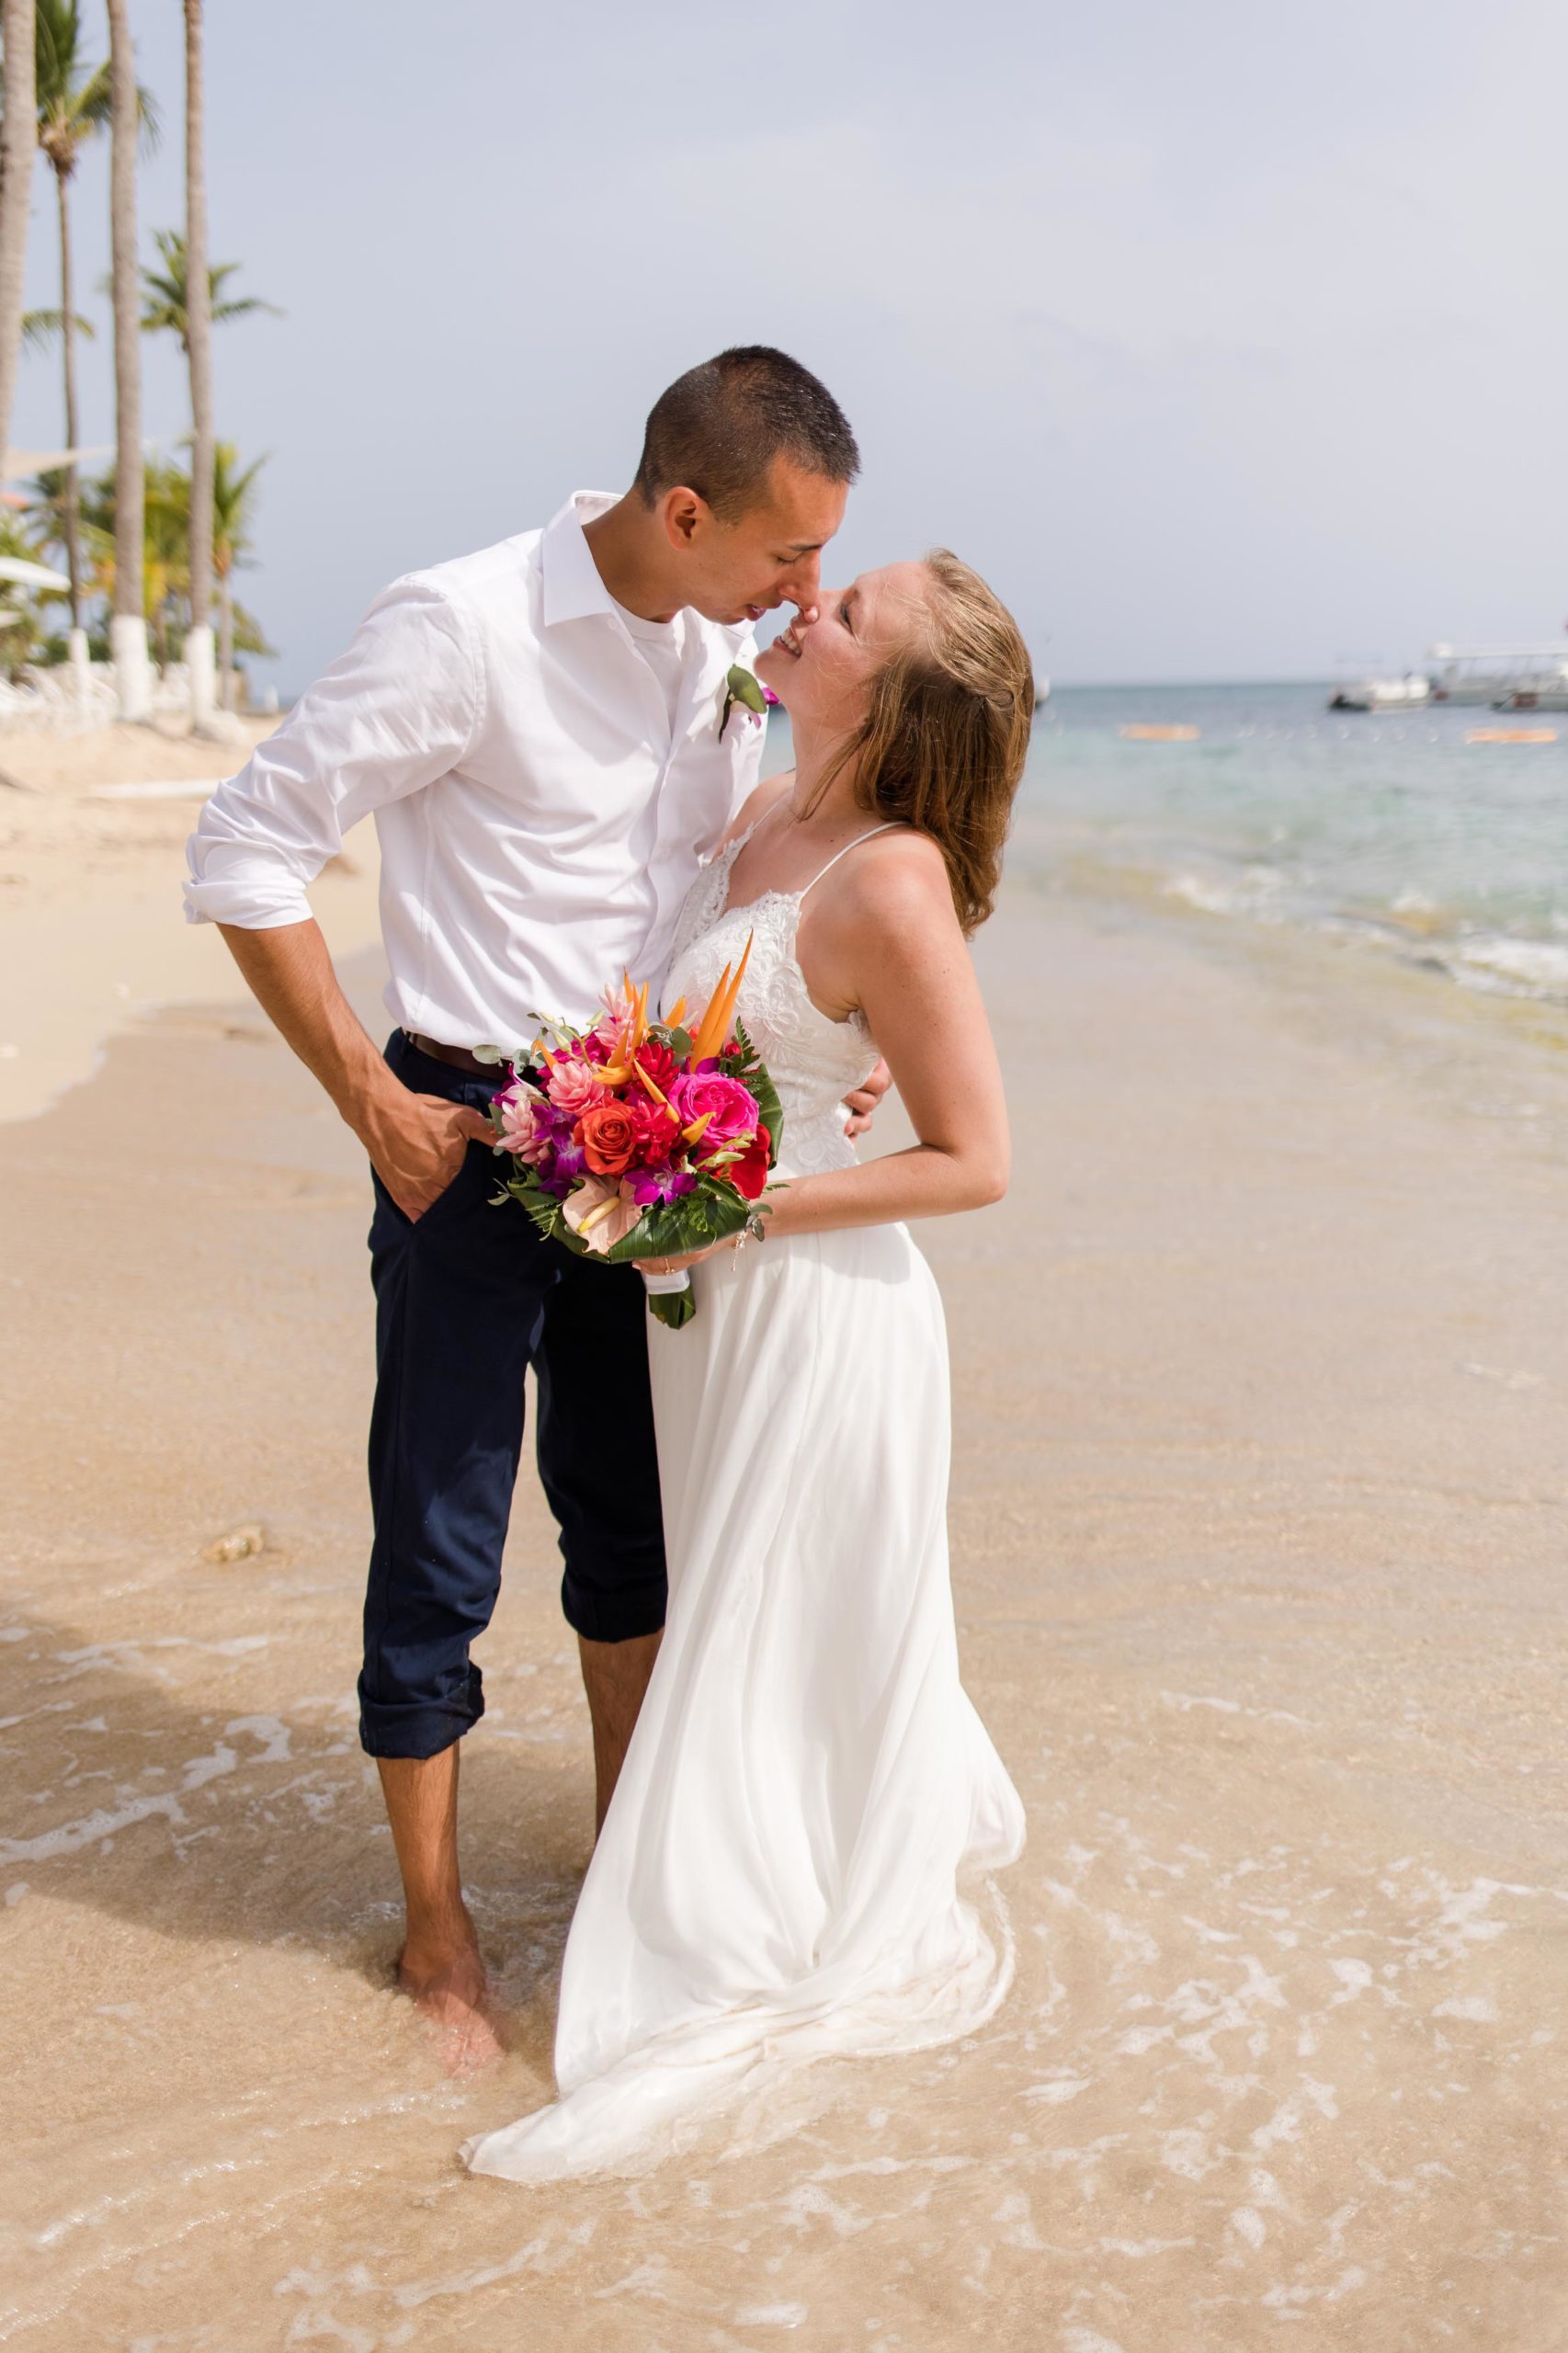 Groom And Groomsmen Attire For Your Beach Wedding Destination Wedding Tips 1522